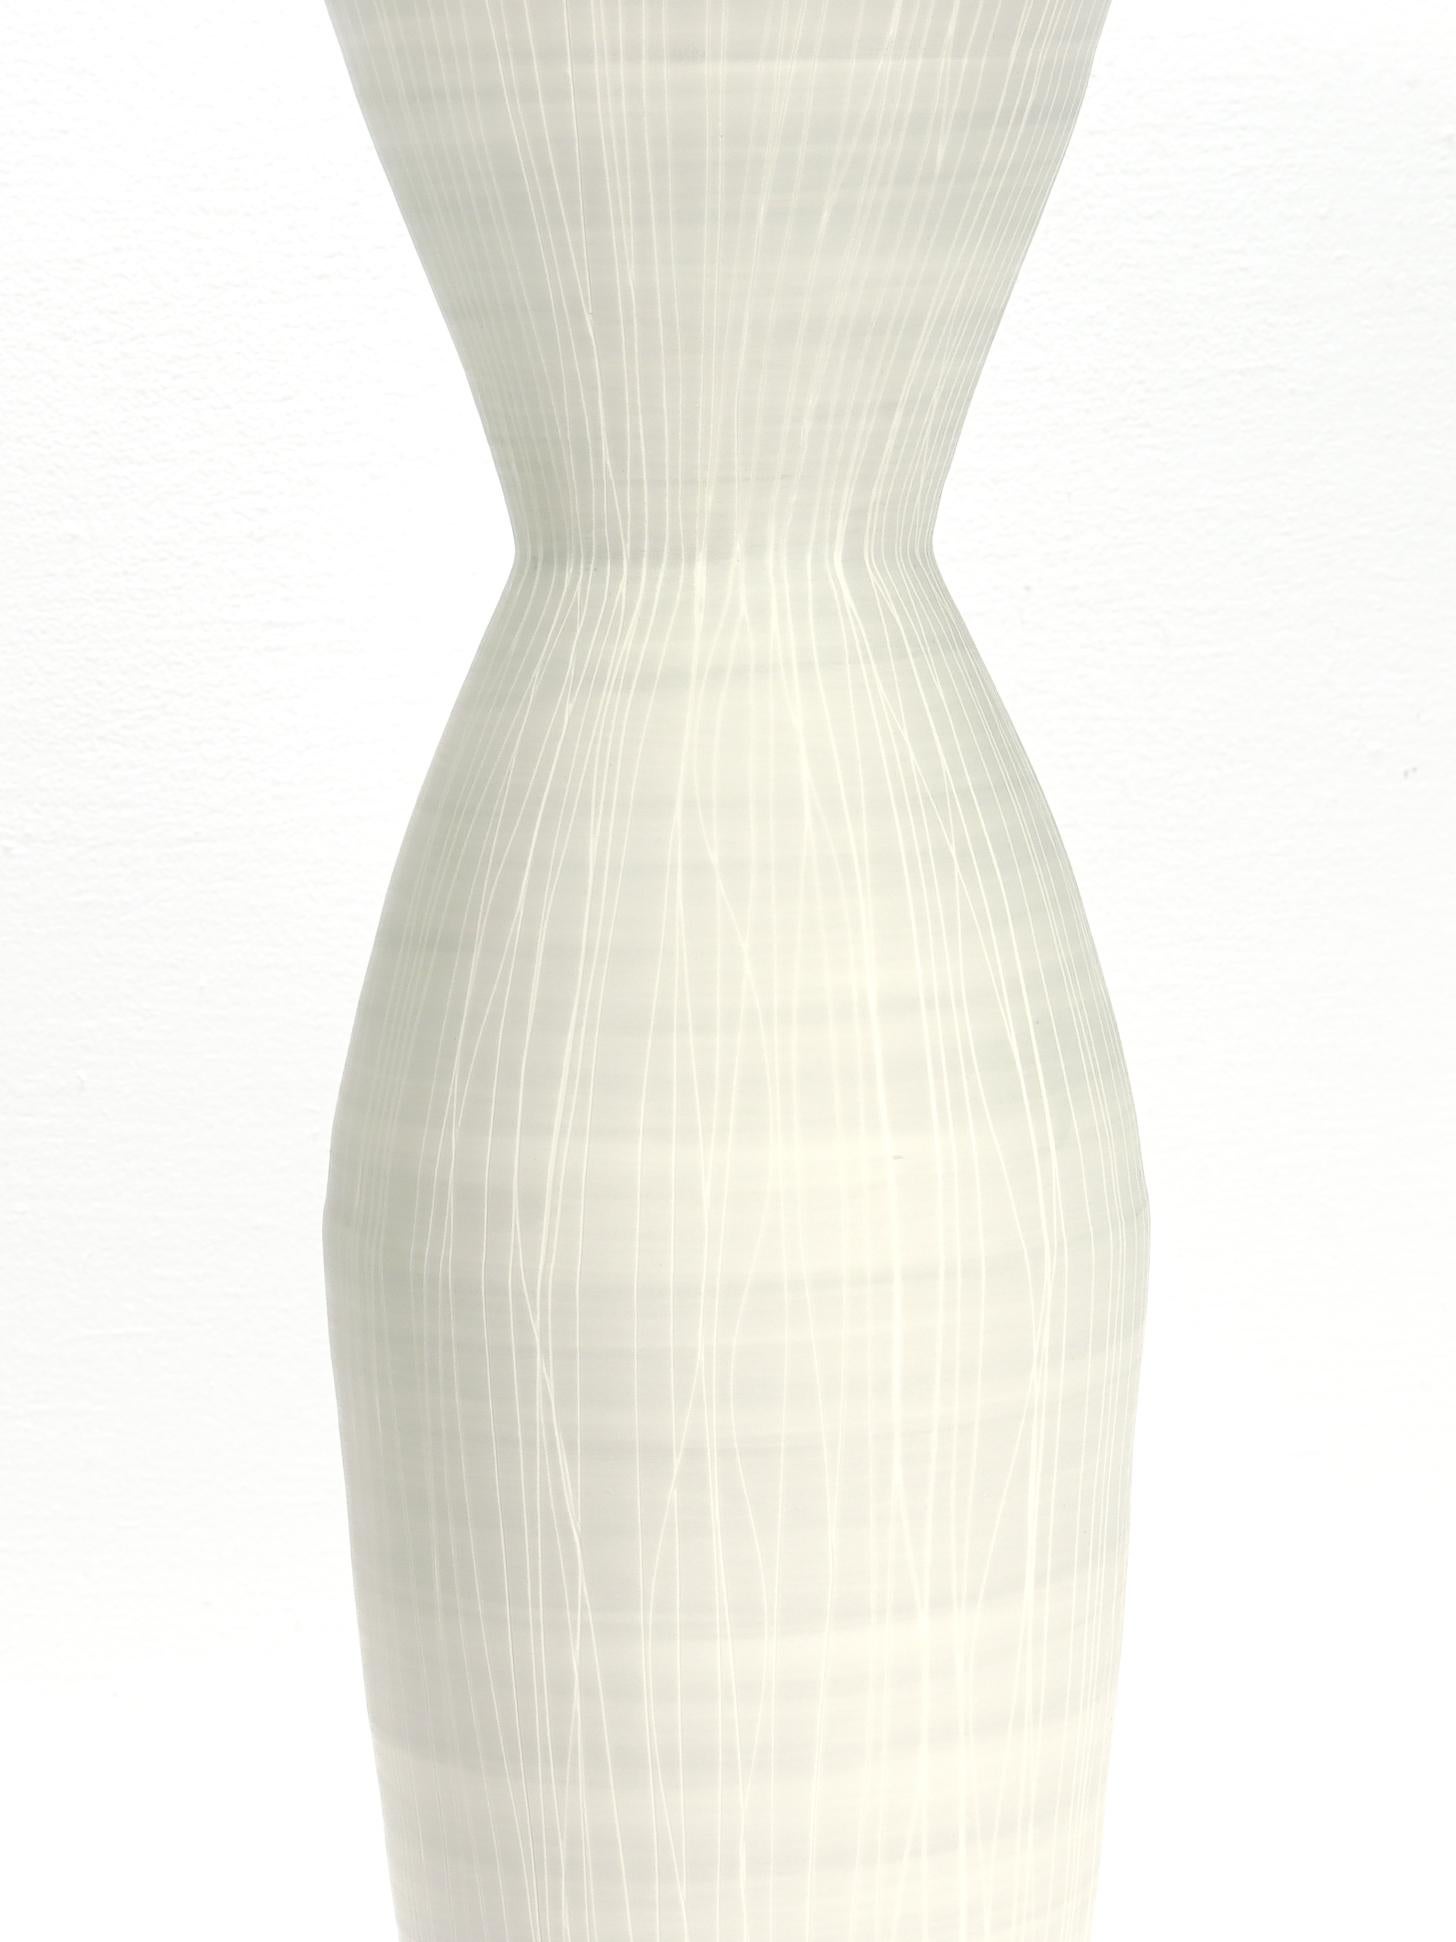 Large Signed Anna Sykora Sgraffito Vase For Sale 4